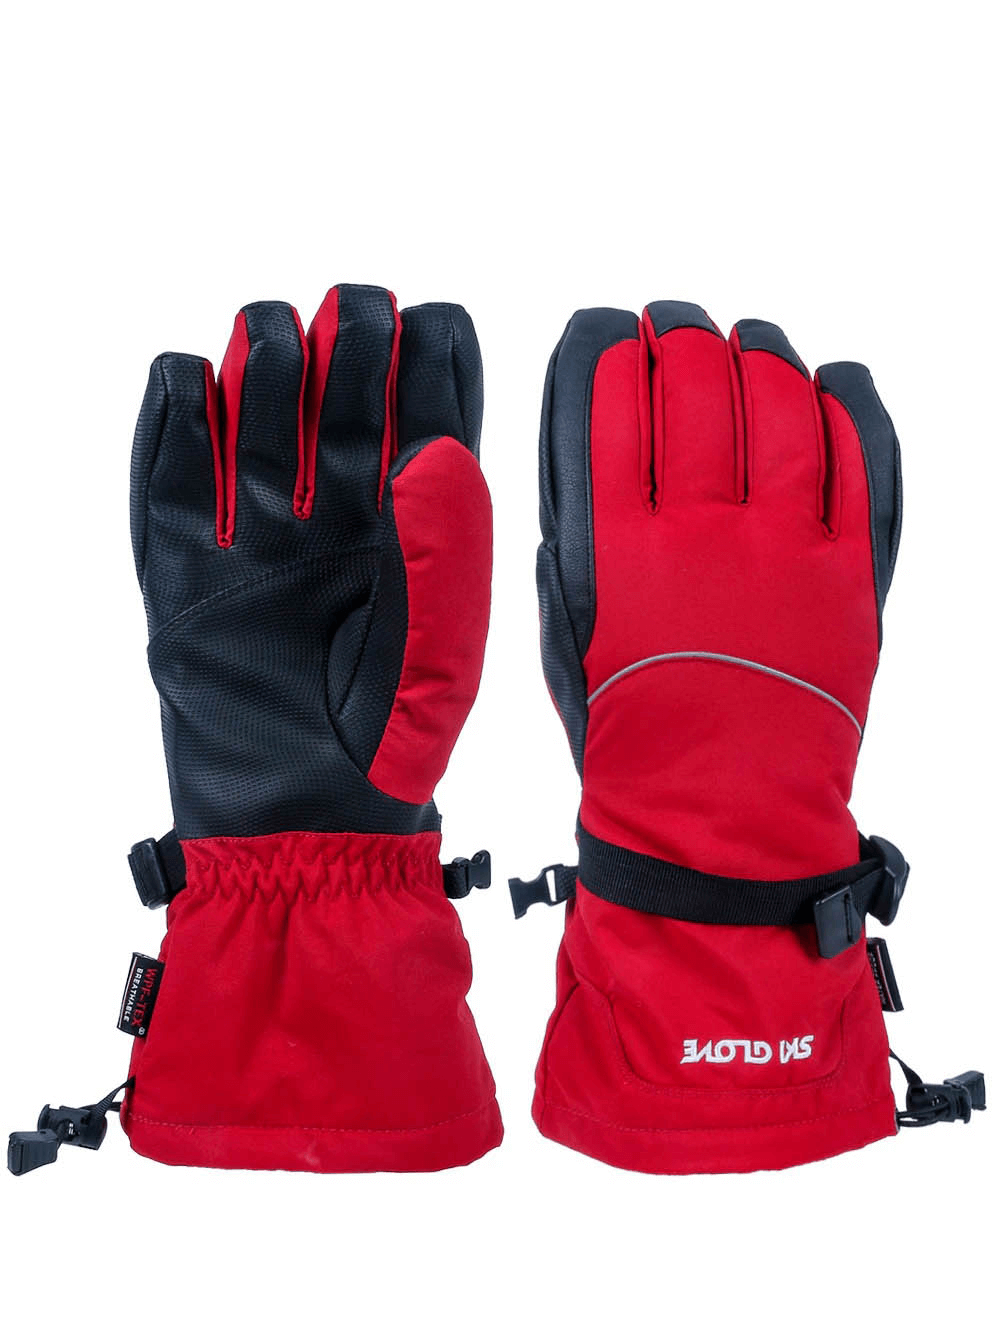 Soft Double Waterproof Design Touchscreen Snow Ski Gloves - SF0612